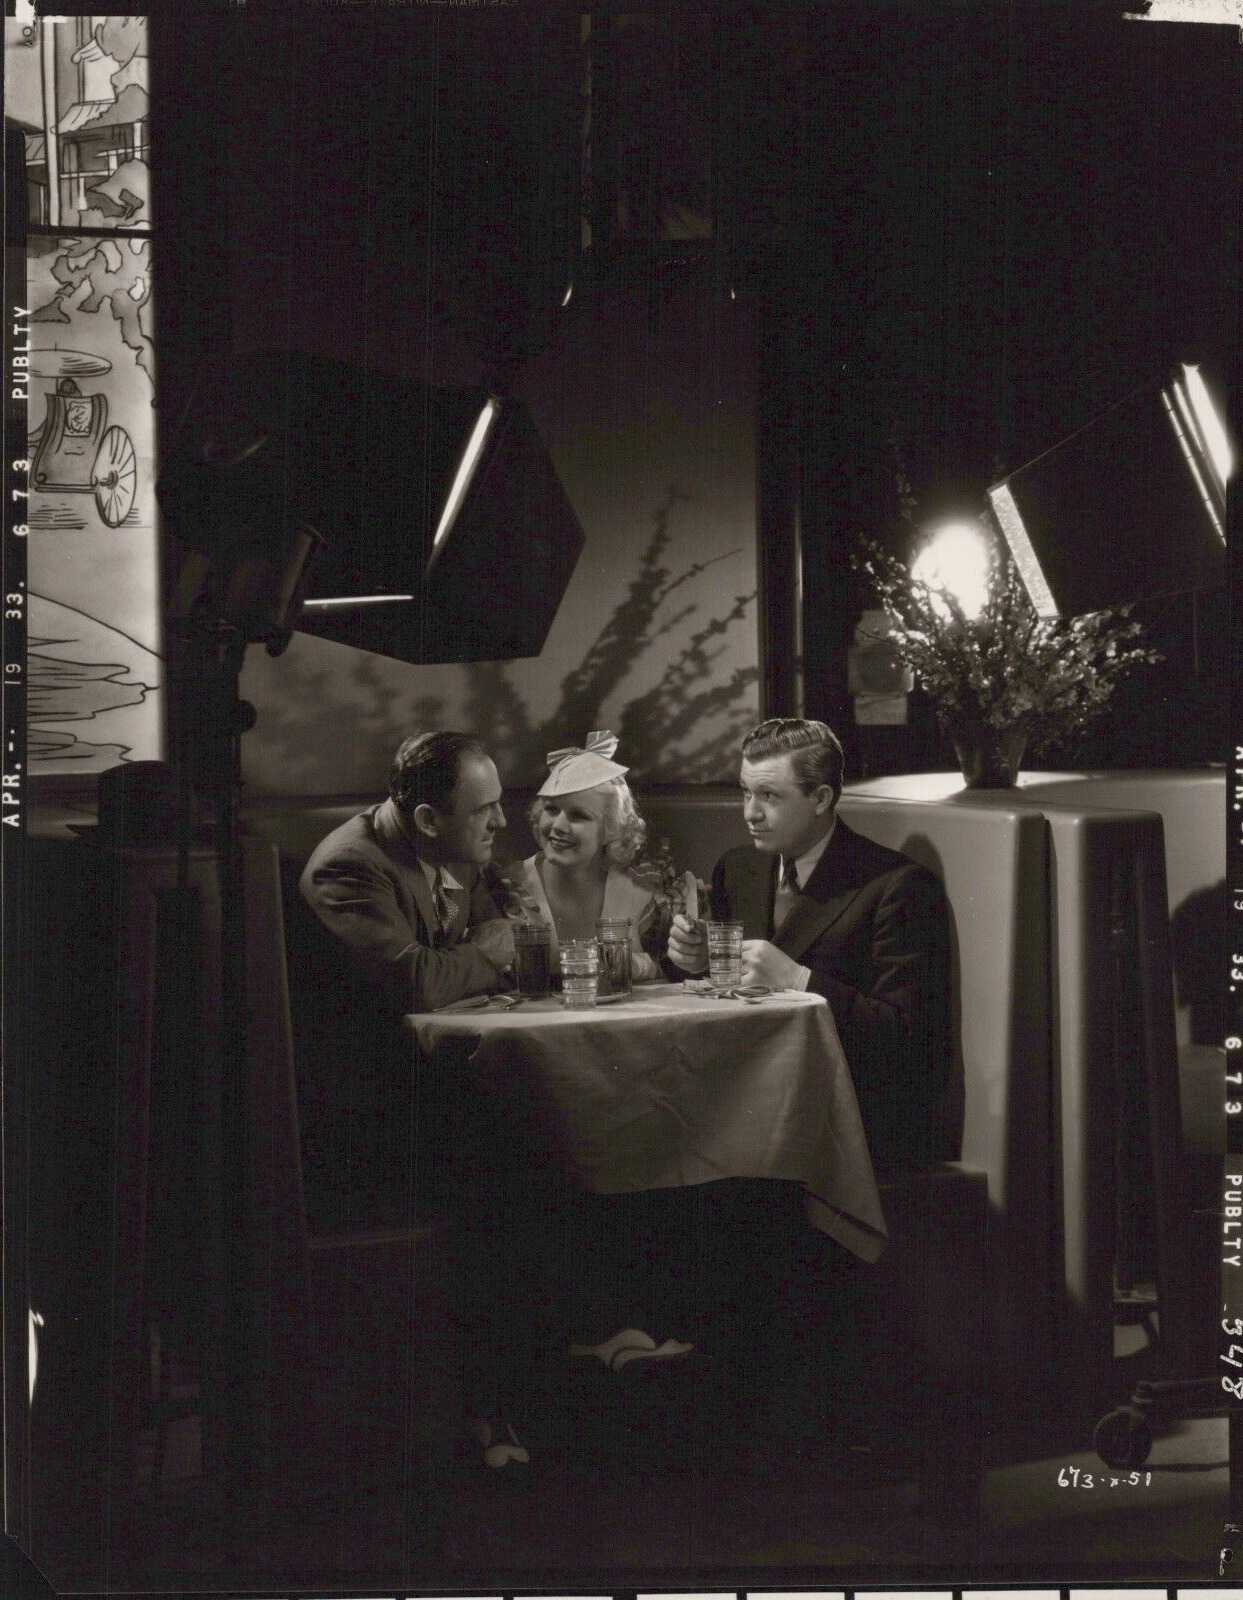 HOLLYWOOD BEAUTY JEAN HARLOW + CLARK GABLE STUNNING PORTRAIT 1950s Photo 322